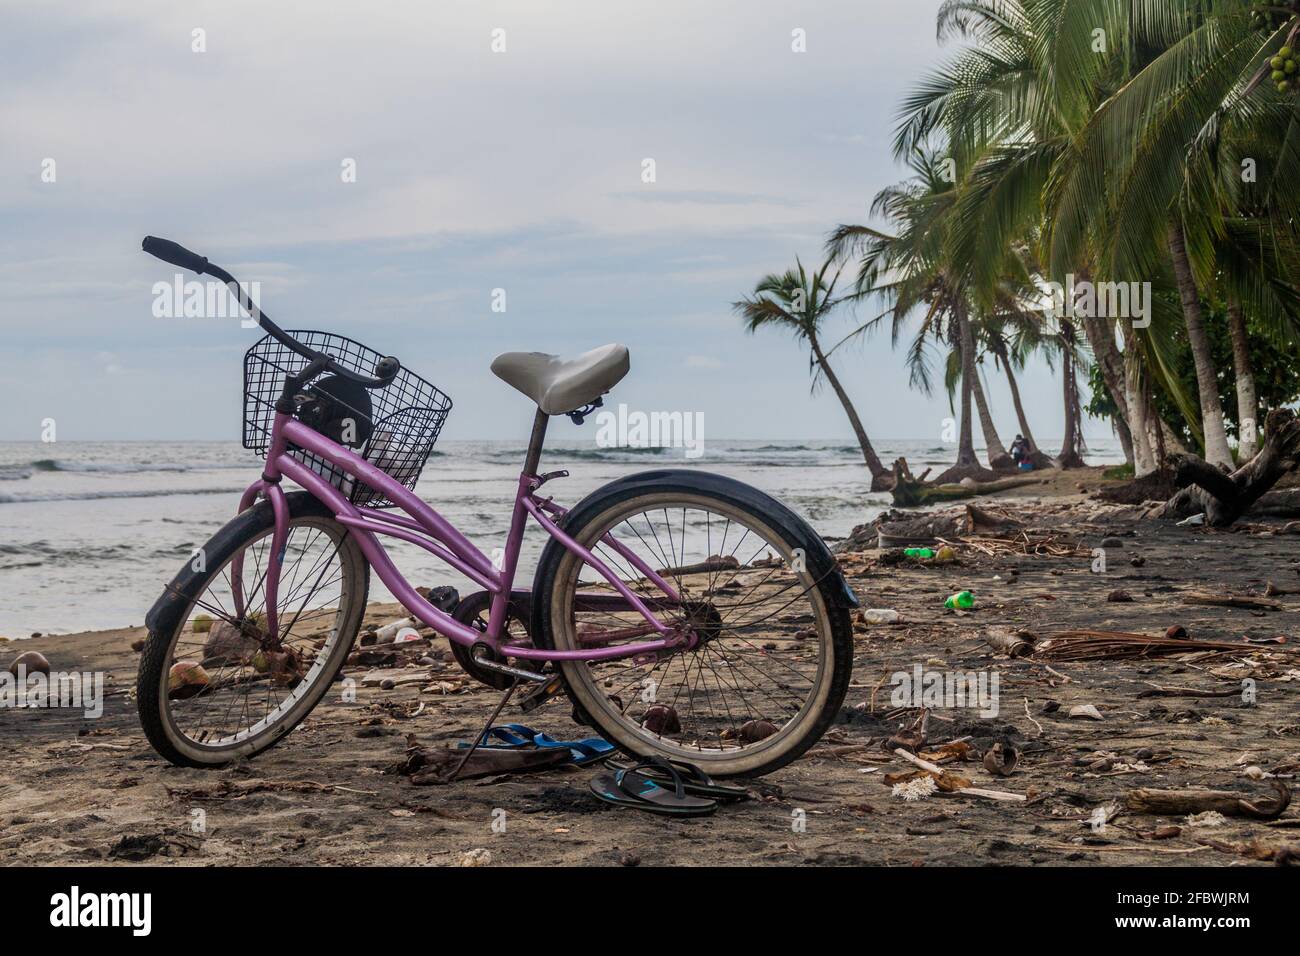 Bicycle on a beach in Puerto Viejo de Talamanca village, Costa Rica Stock Photo